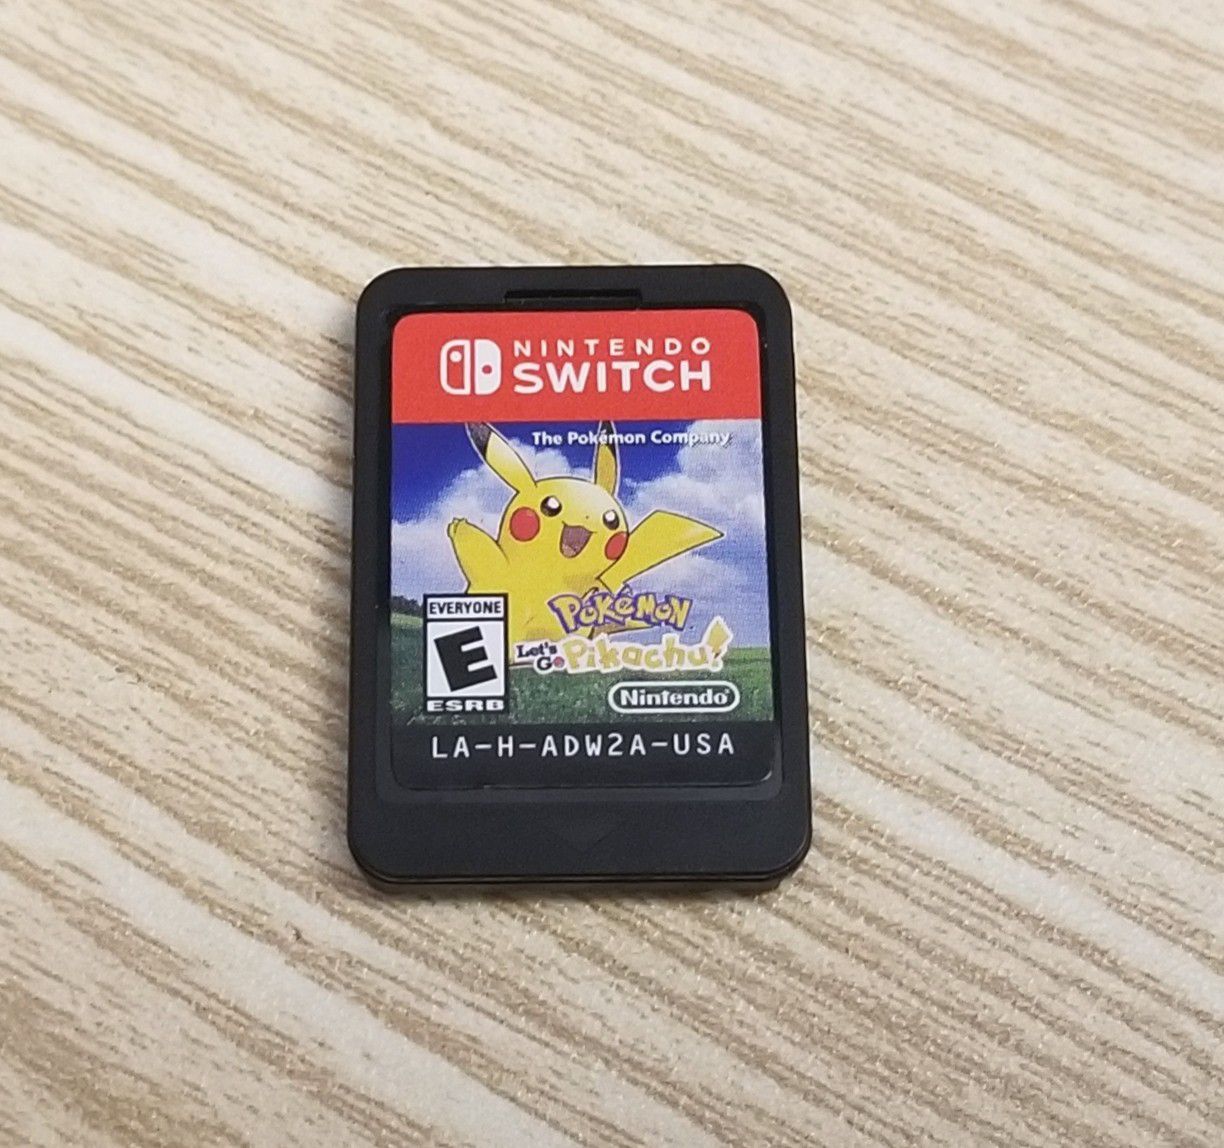 Nintendo Switch Pokemon Let's Go Pikachu game